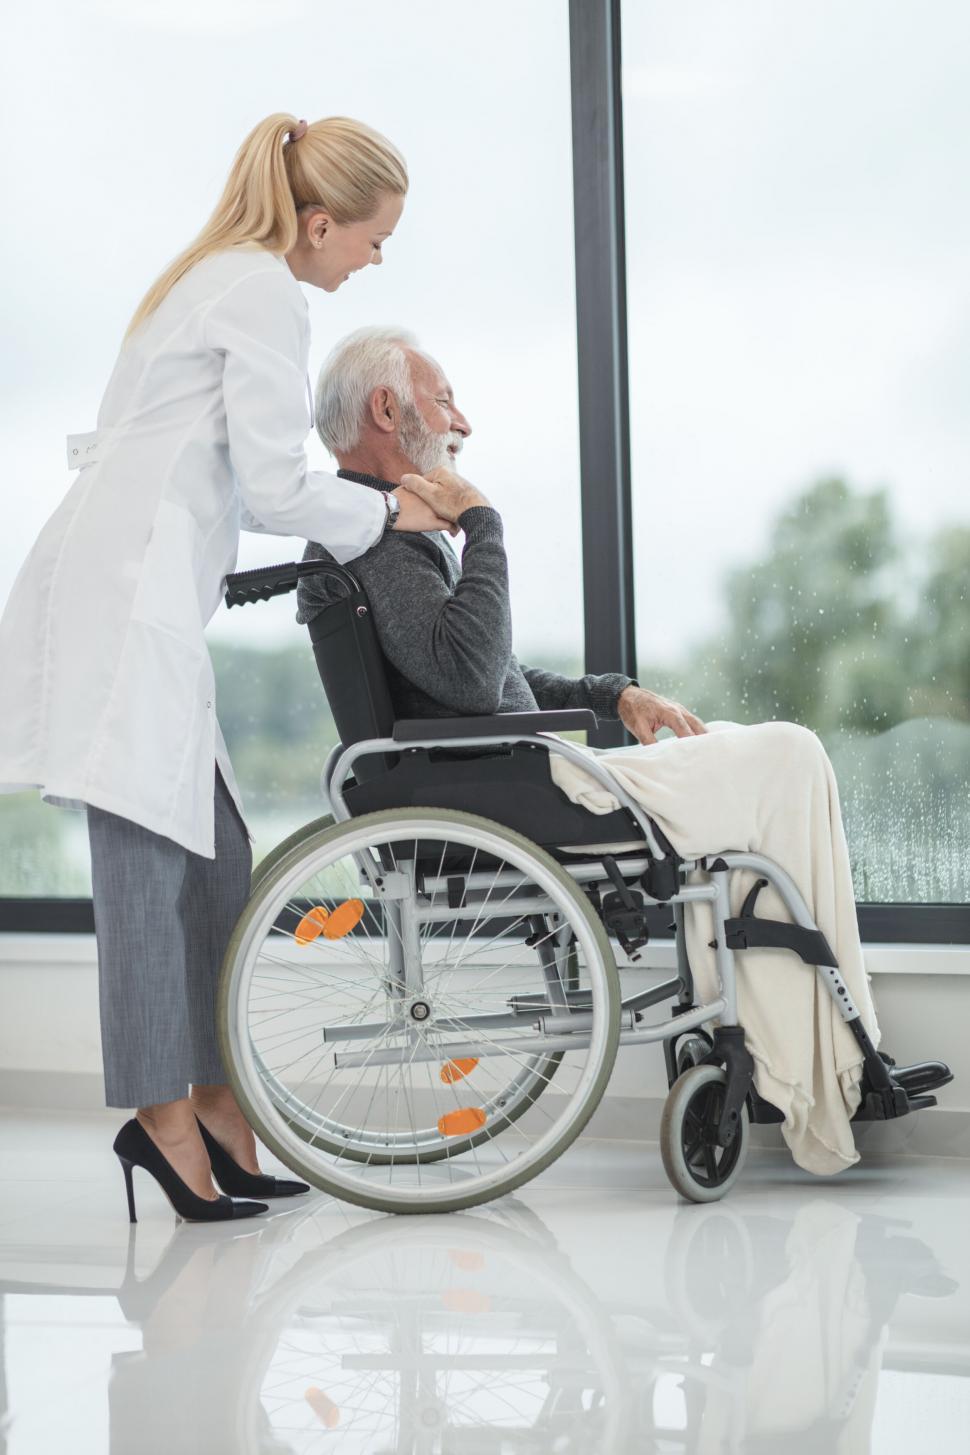 Free Image of Doctor comforting elderly man in wheelchair 